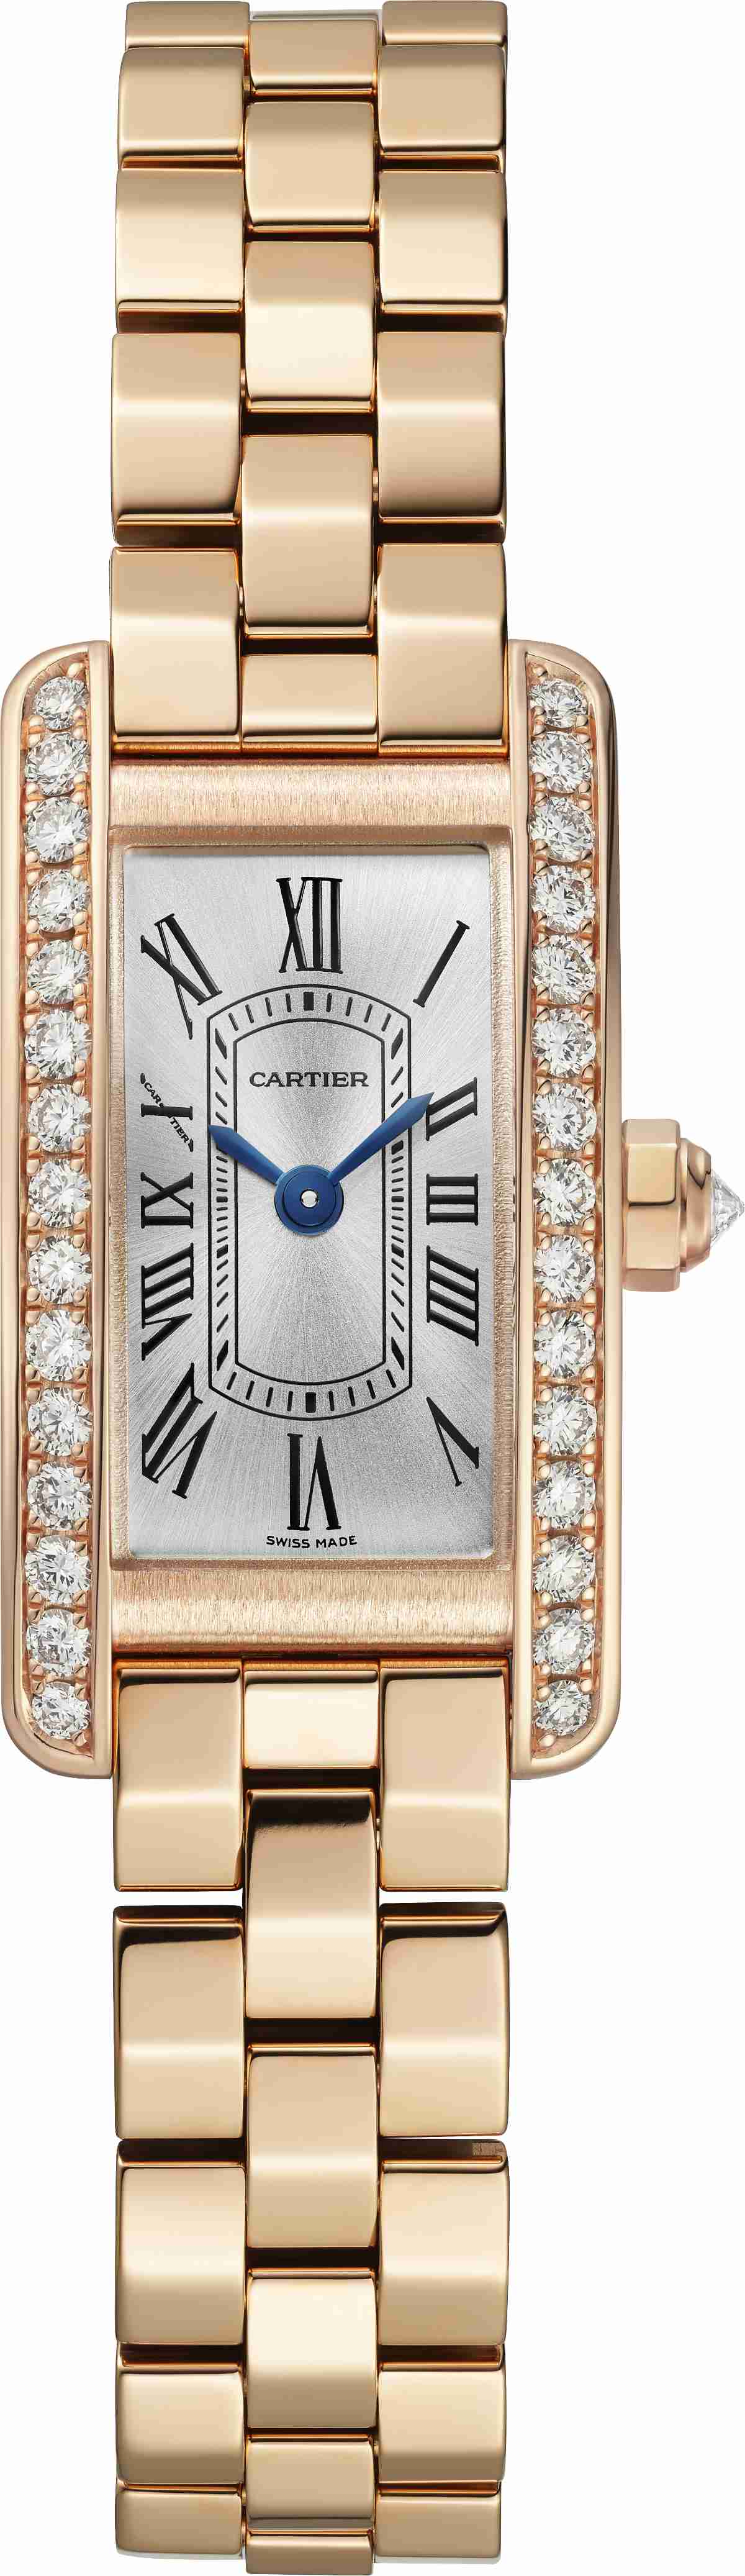 Cartier Relaunches Its New Tank Américaine Watch